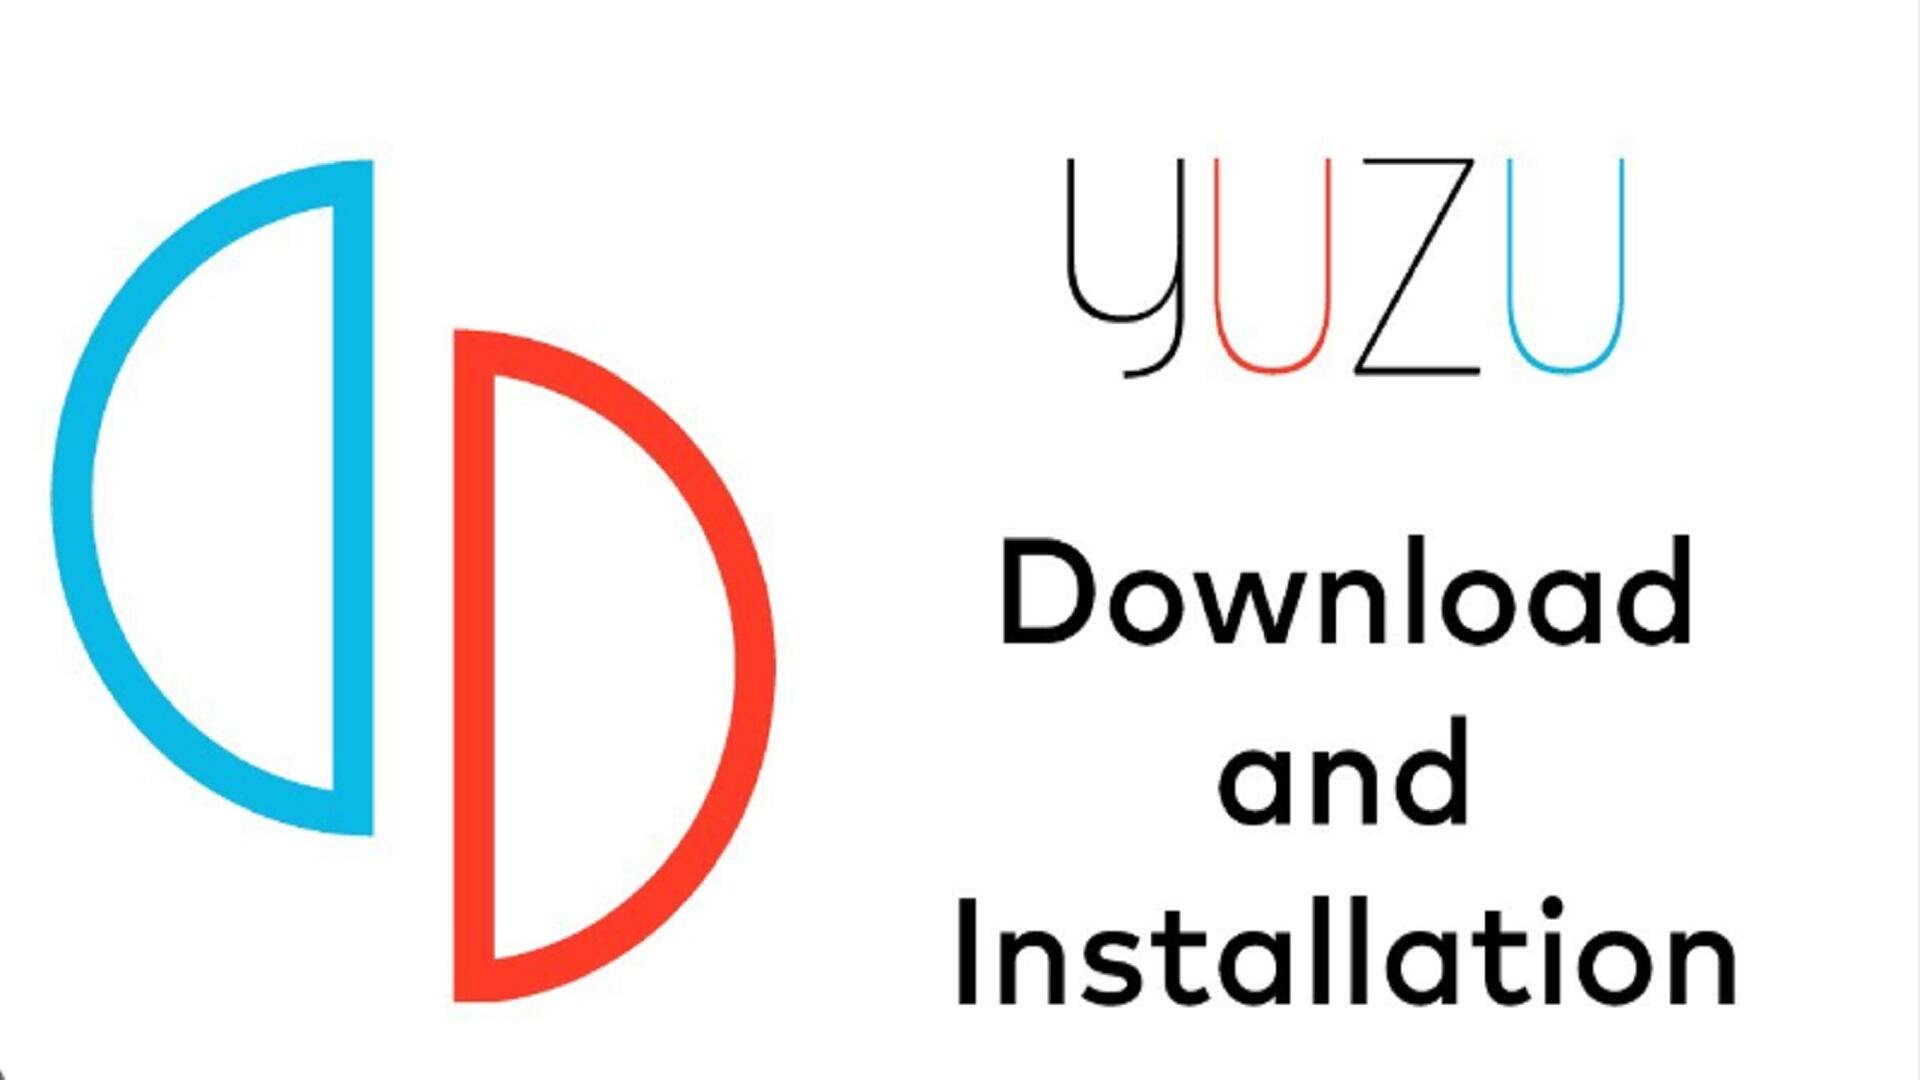 Yuzu Emulator APK (Android App) - Free Download